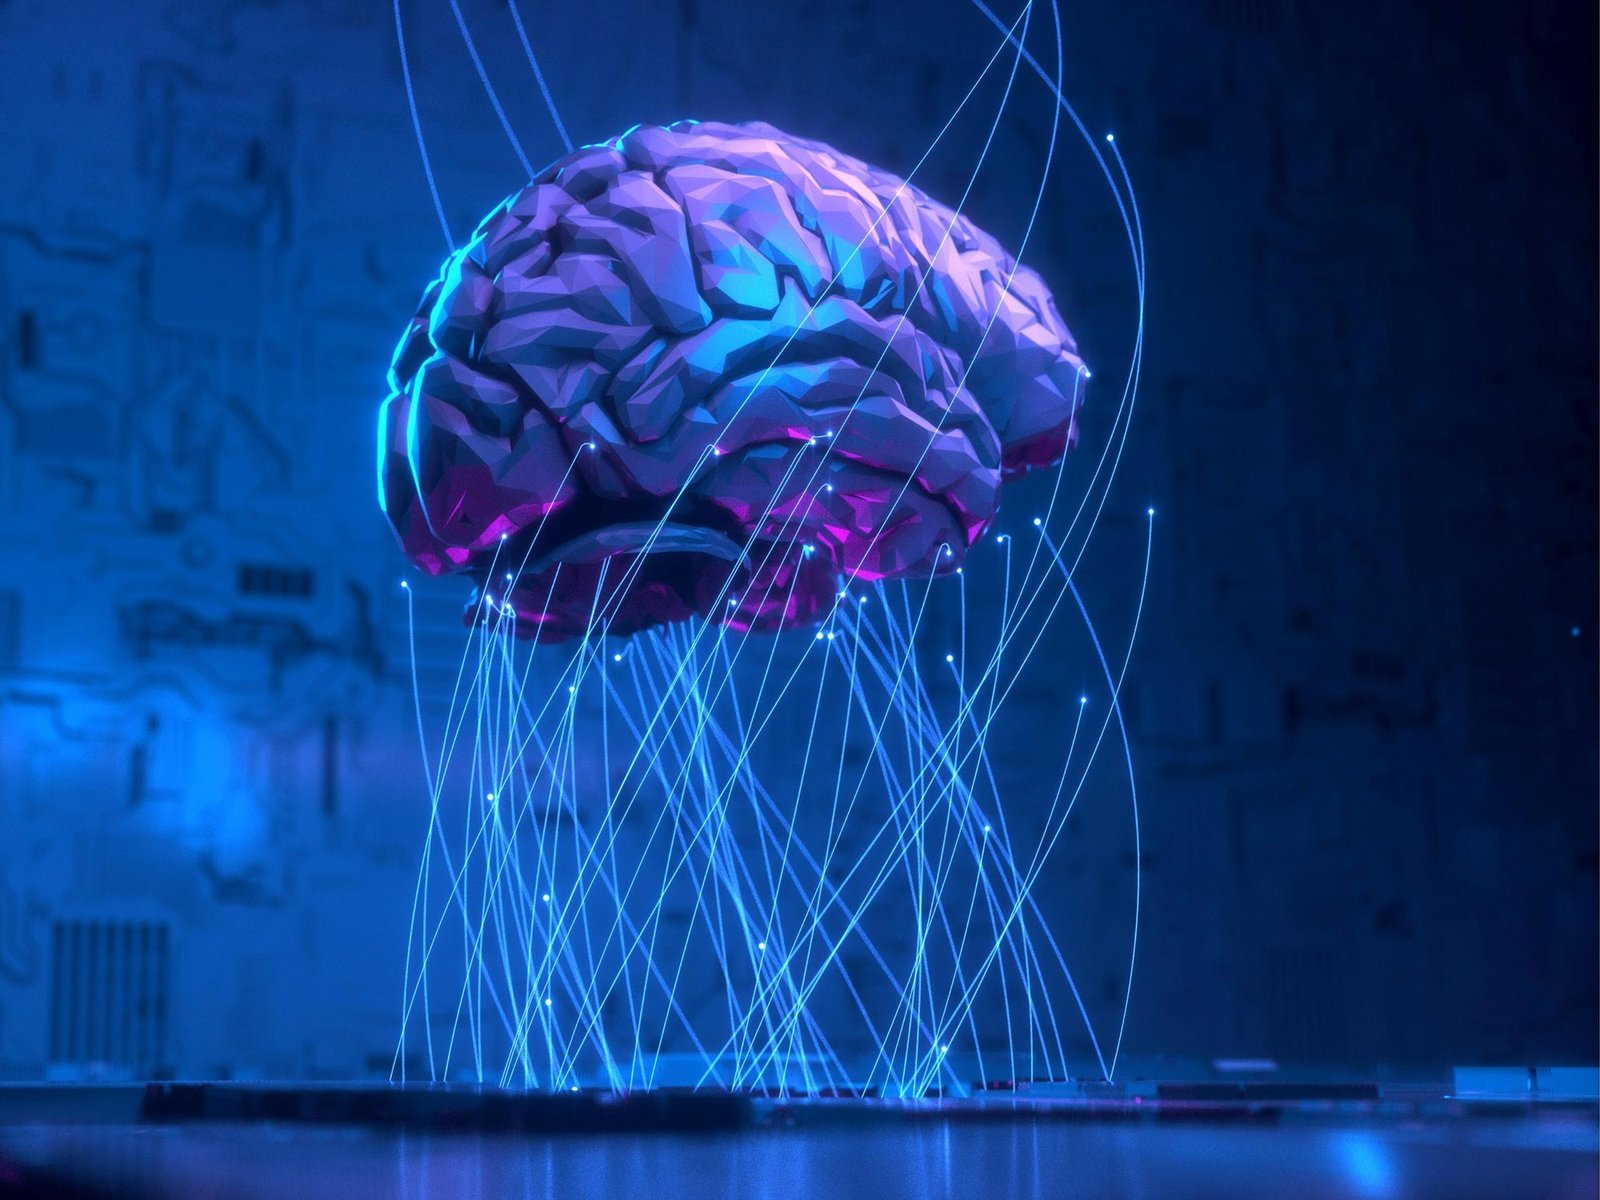 Groundbreaking AI Method Identifies New Parkinson’s Treatments 10x Faster